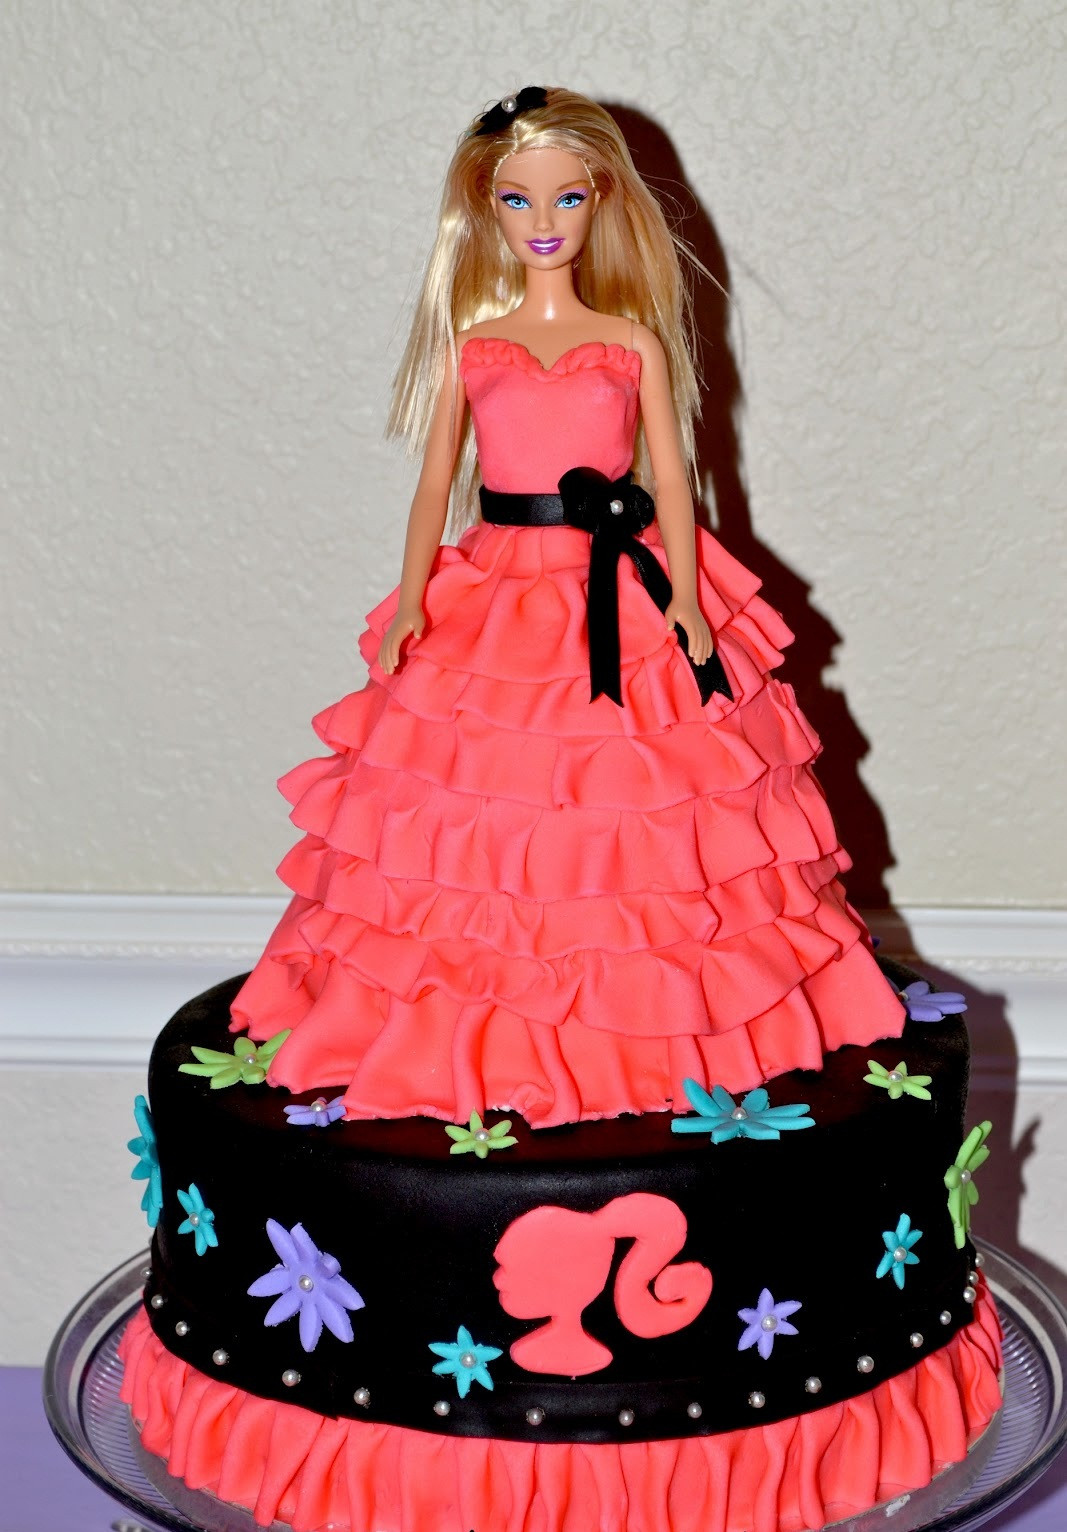 Barbie Birthday Cakes
 Barbie Cakes – Decoration Ideas